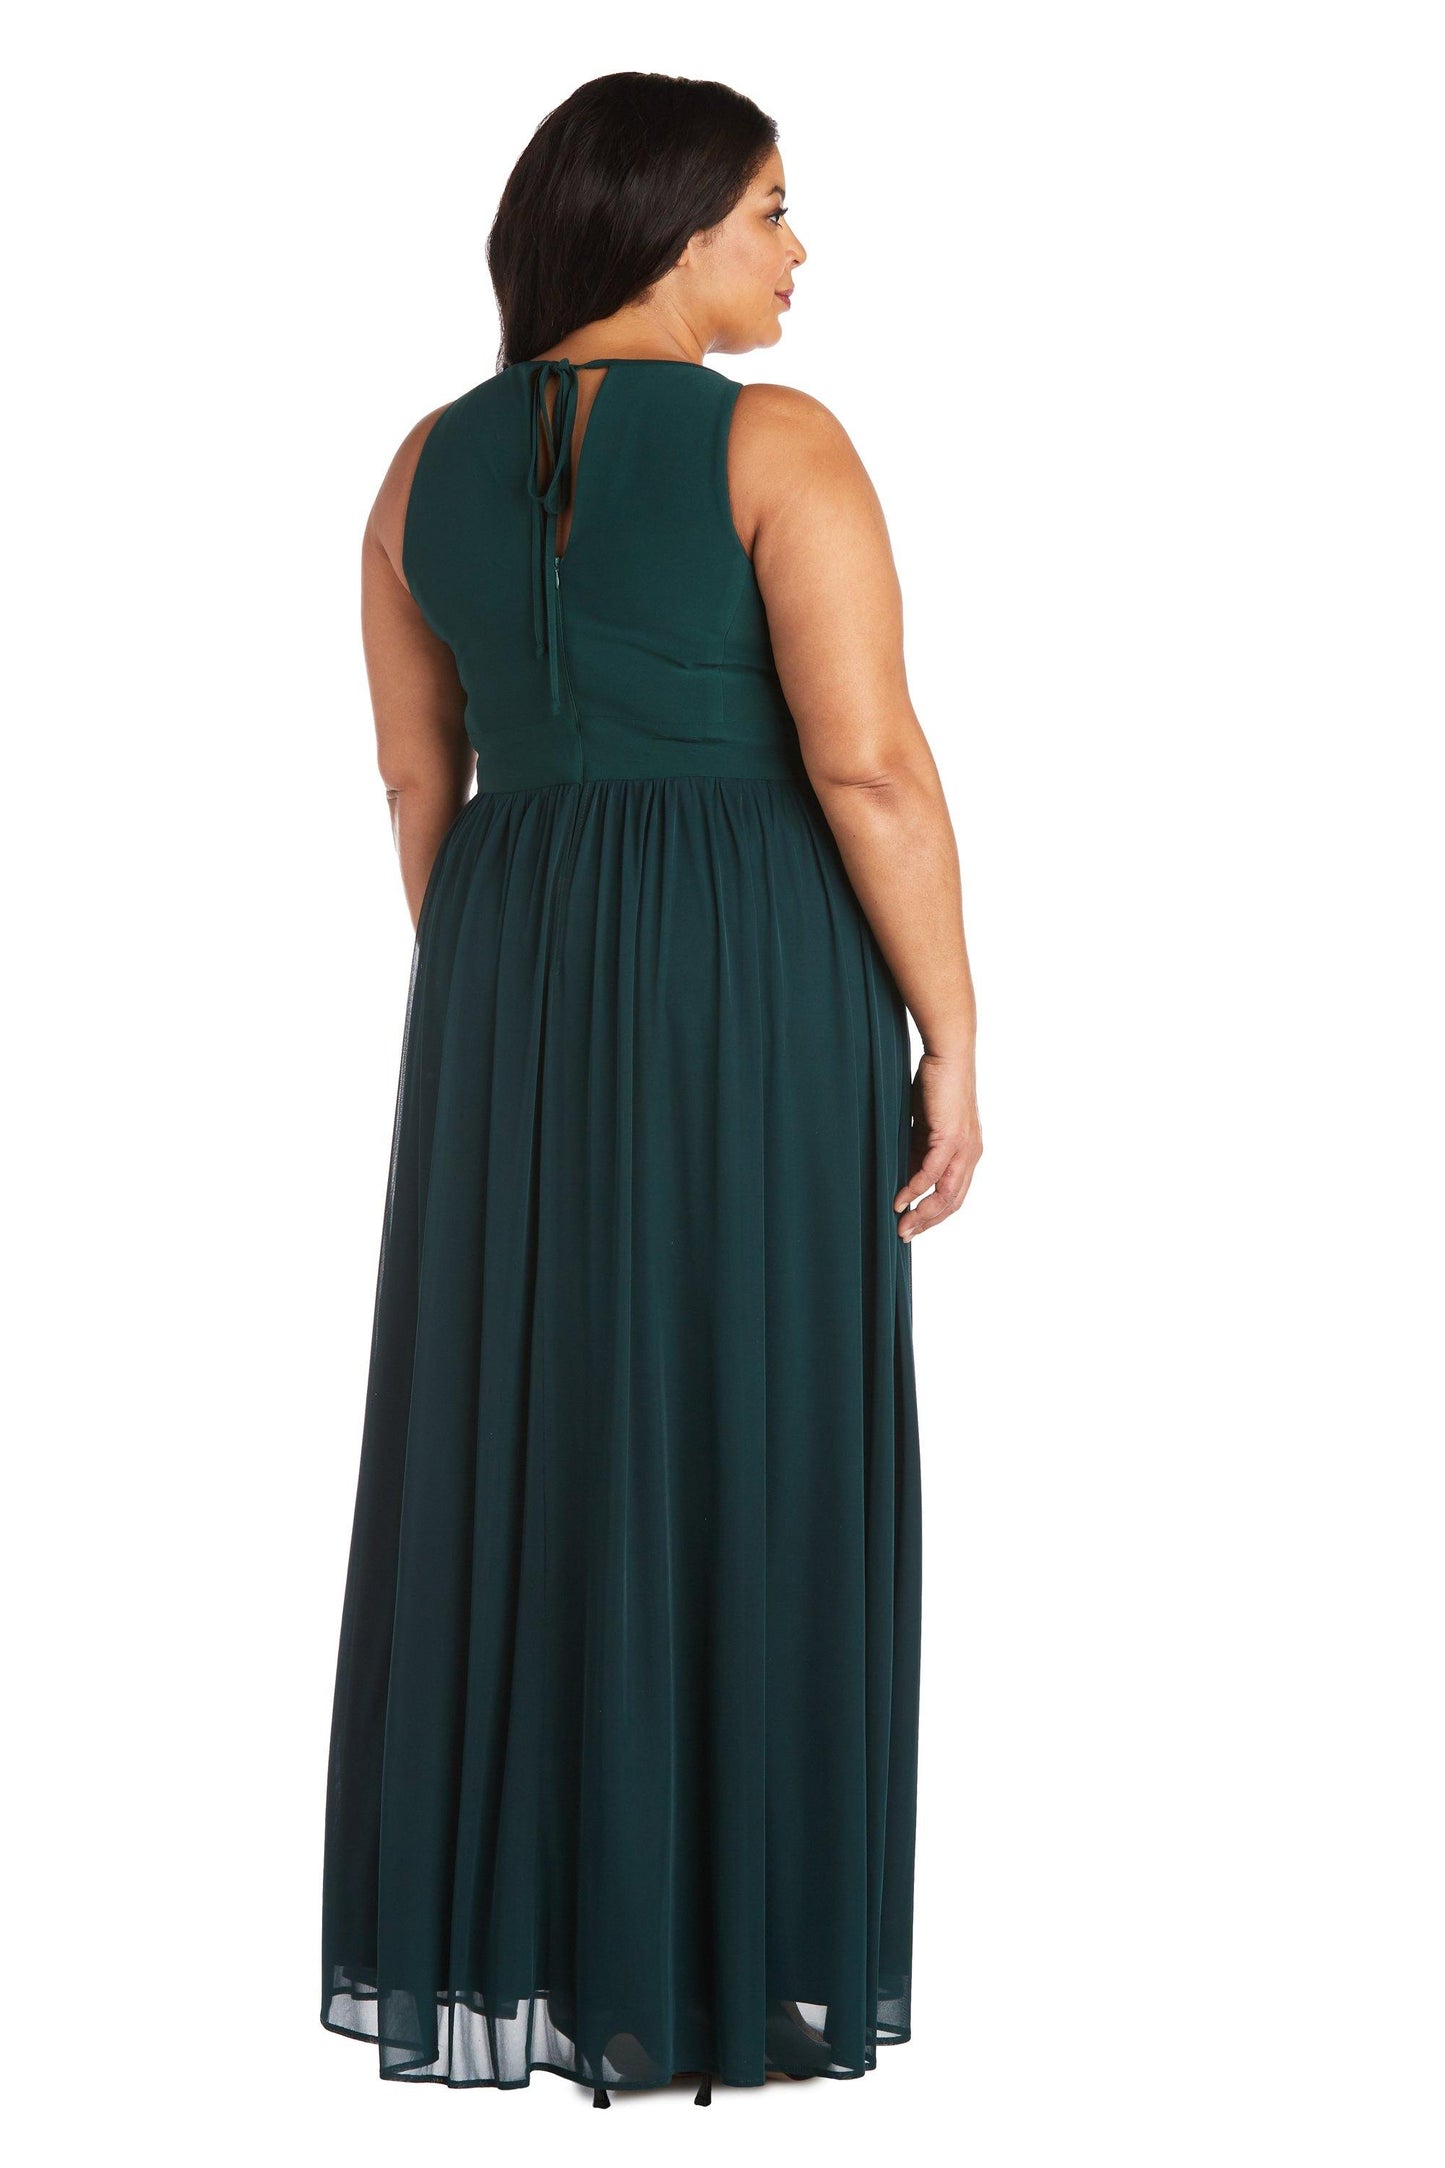 R&M Richards Plus Size Formal Long Dress 5405W - The Dress Outlet